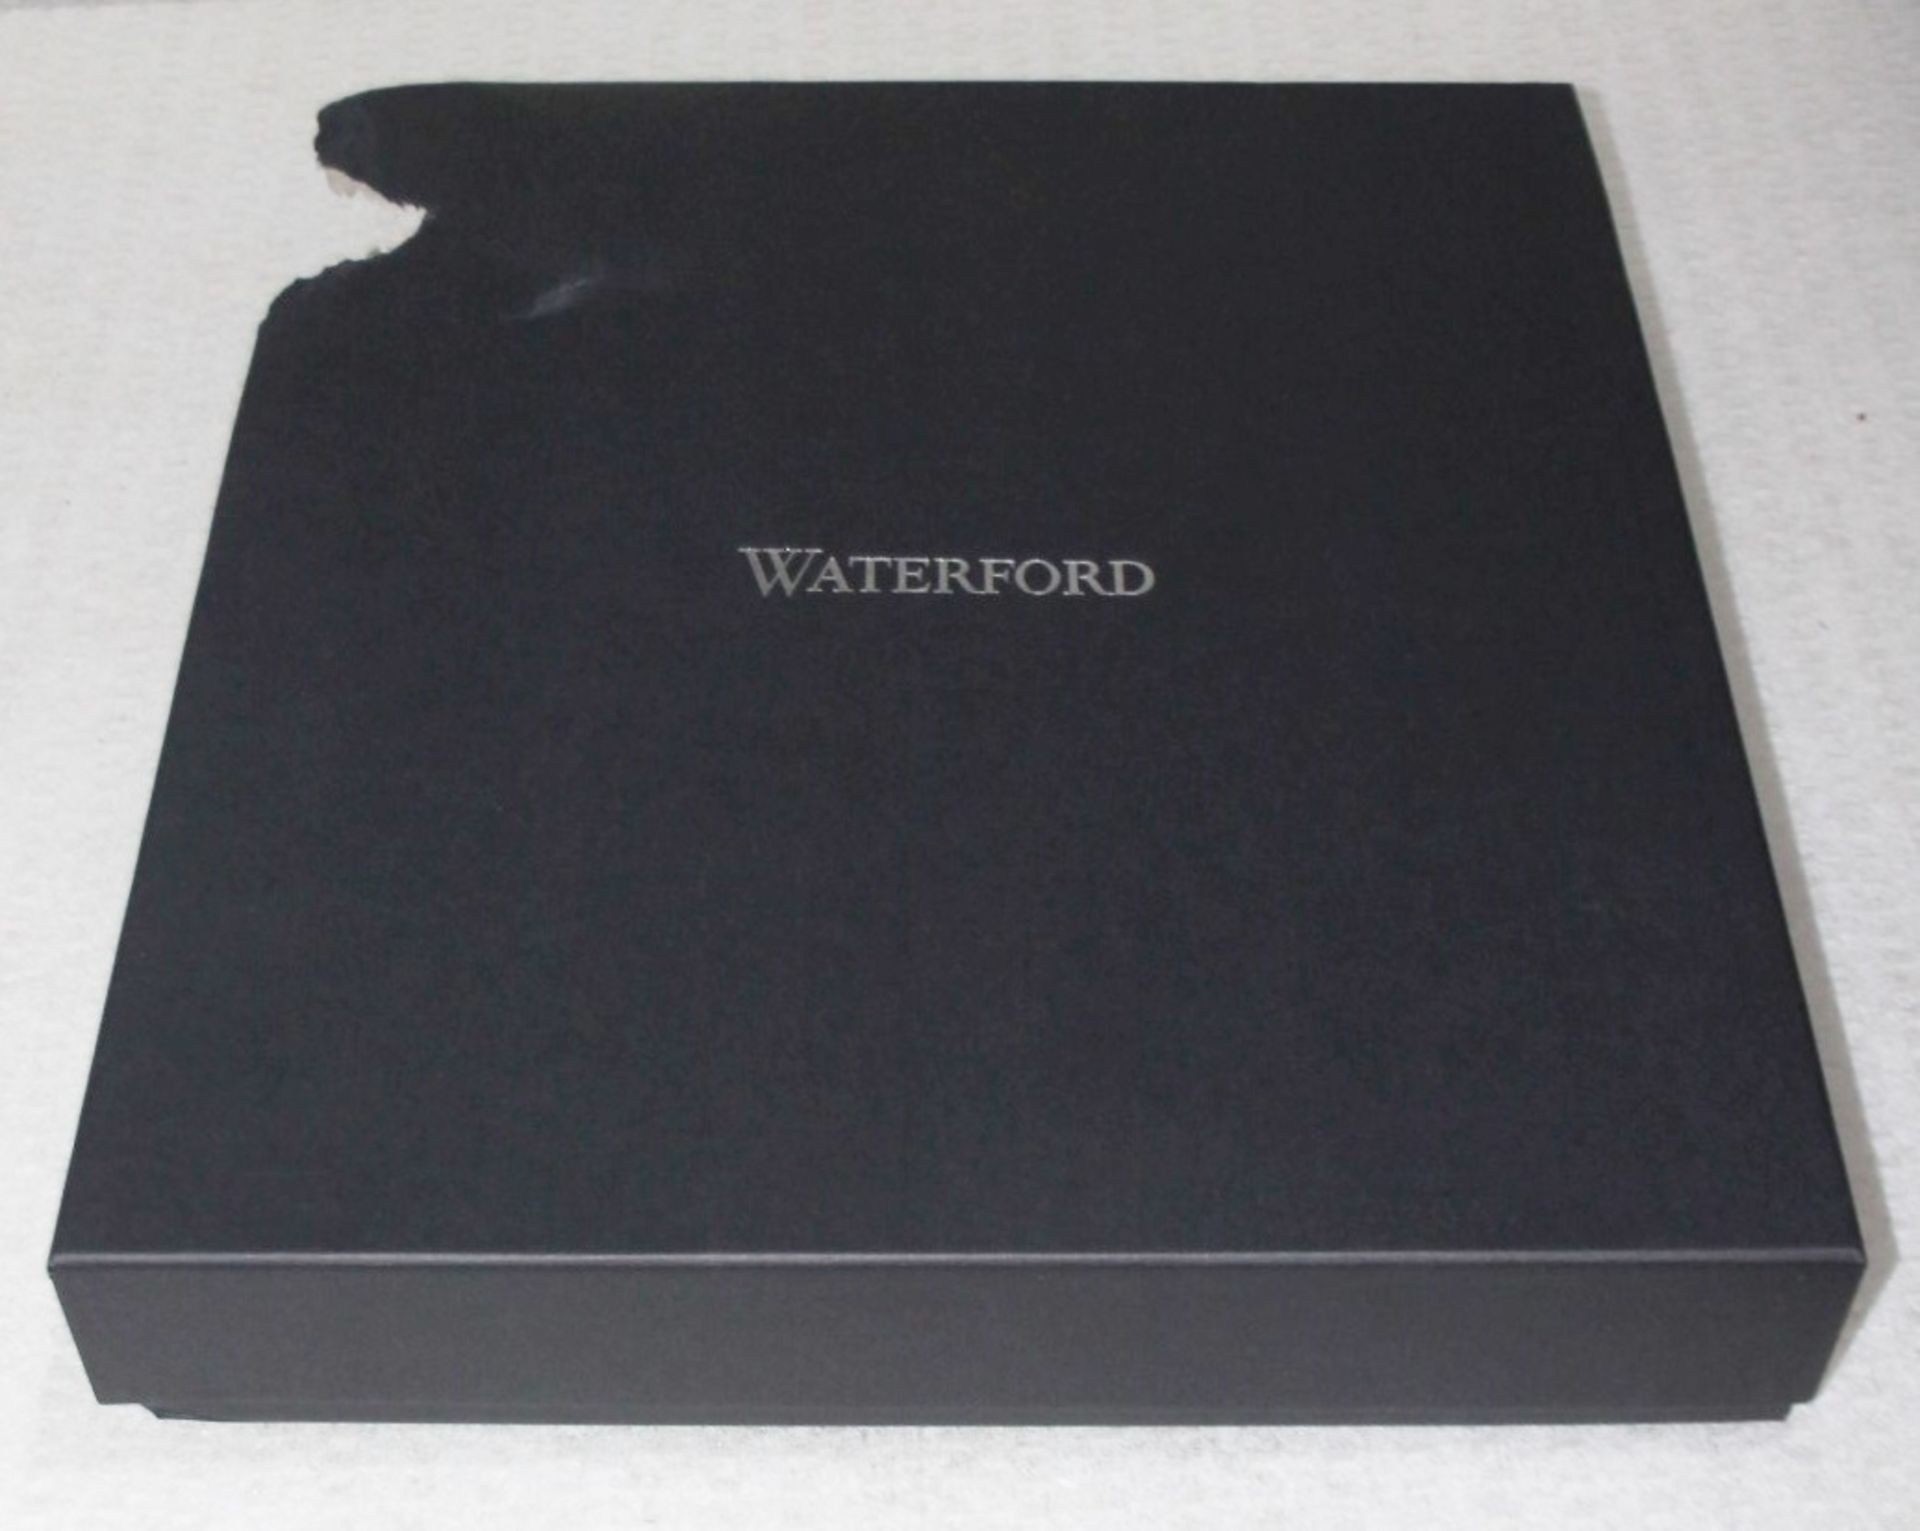 1 x WATERFORD 'Lismore Diamond' Lead Crystal Serving Tray - Original Price £210.00 - Unused Boxed - Image 7 of 7